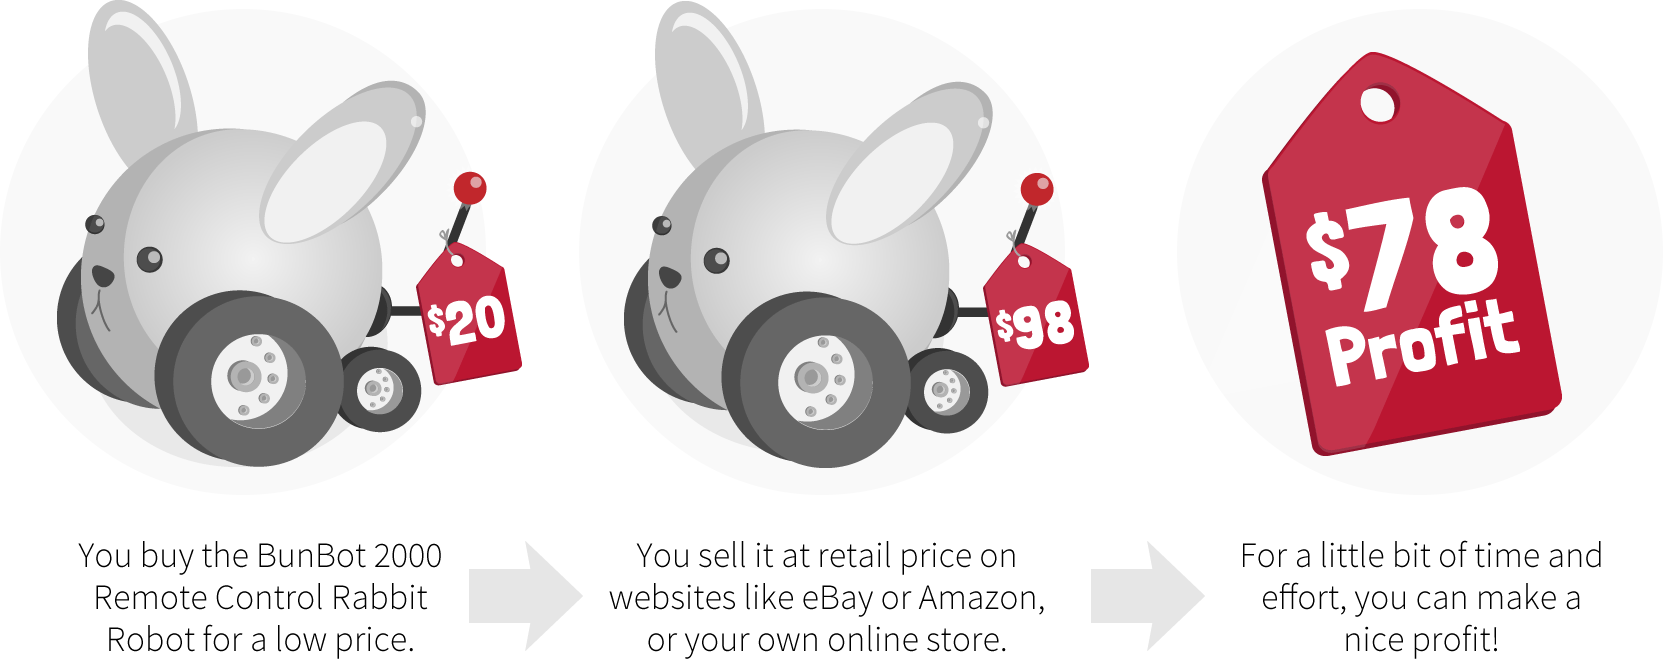 Cheap websites like ebay